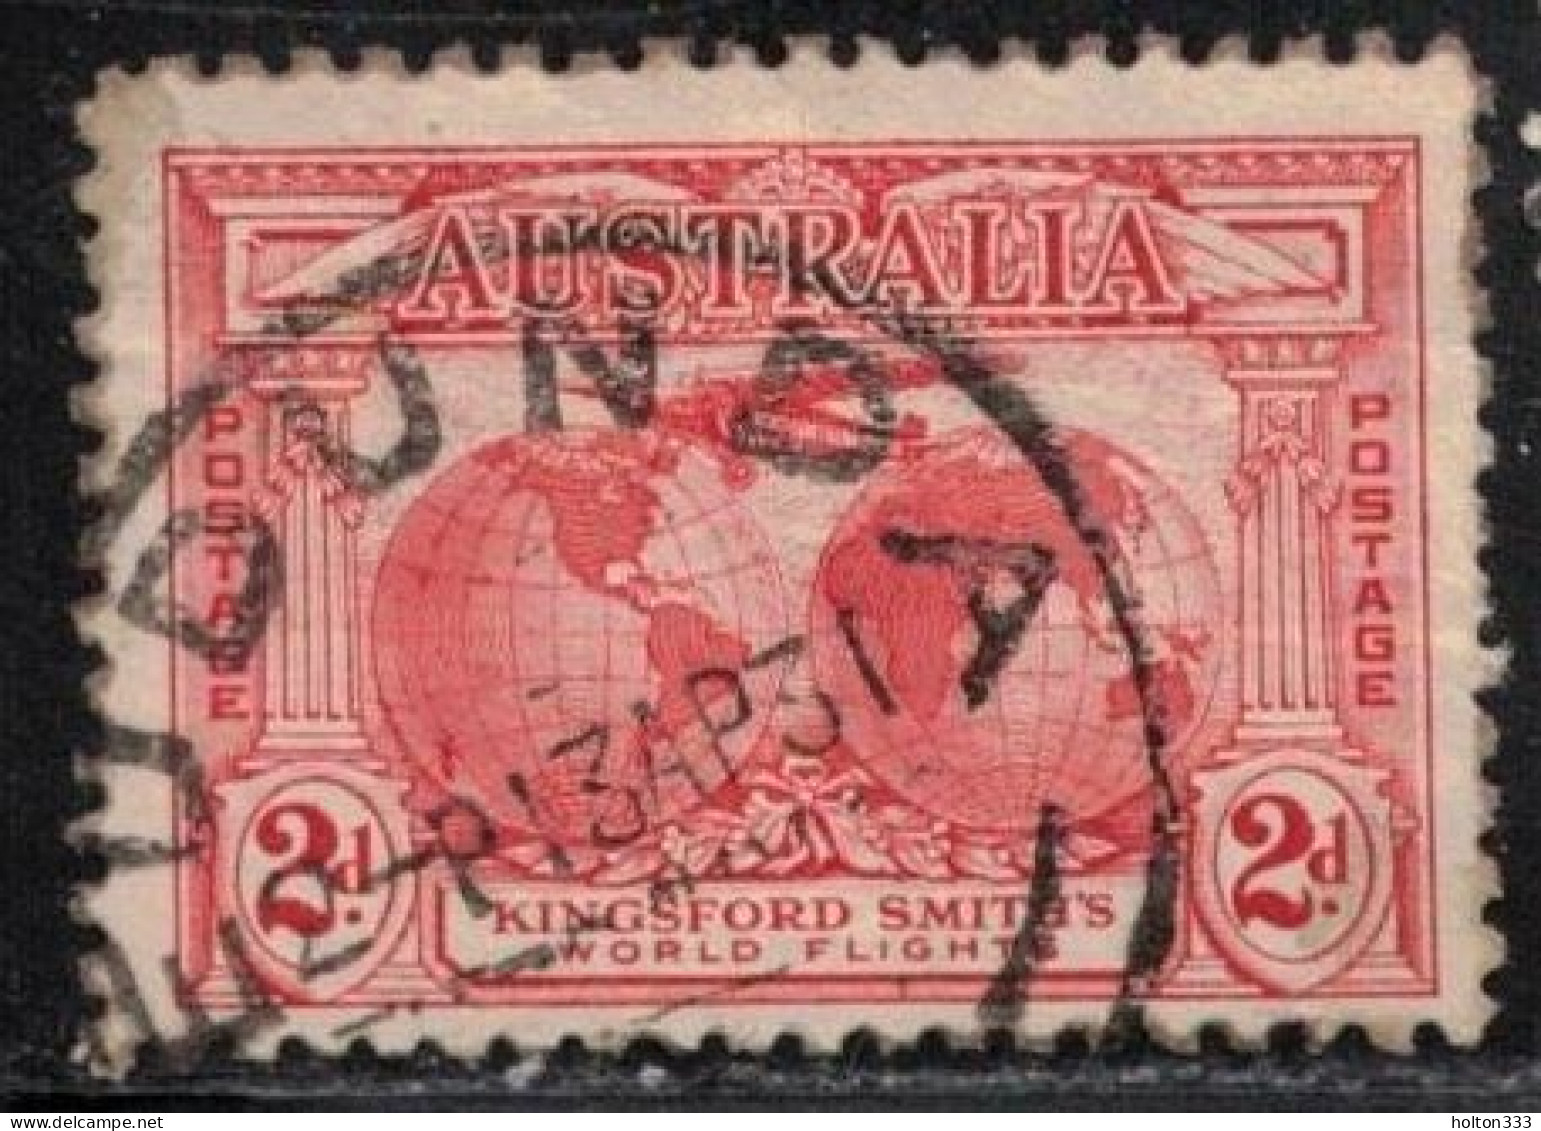 AUSTRALIA Scott # 111 Used - Kingsford Smith's World Flight - Usati